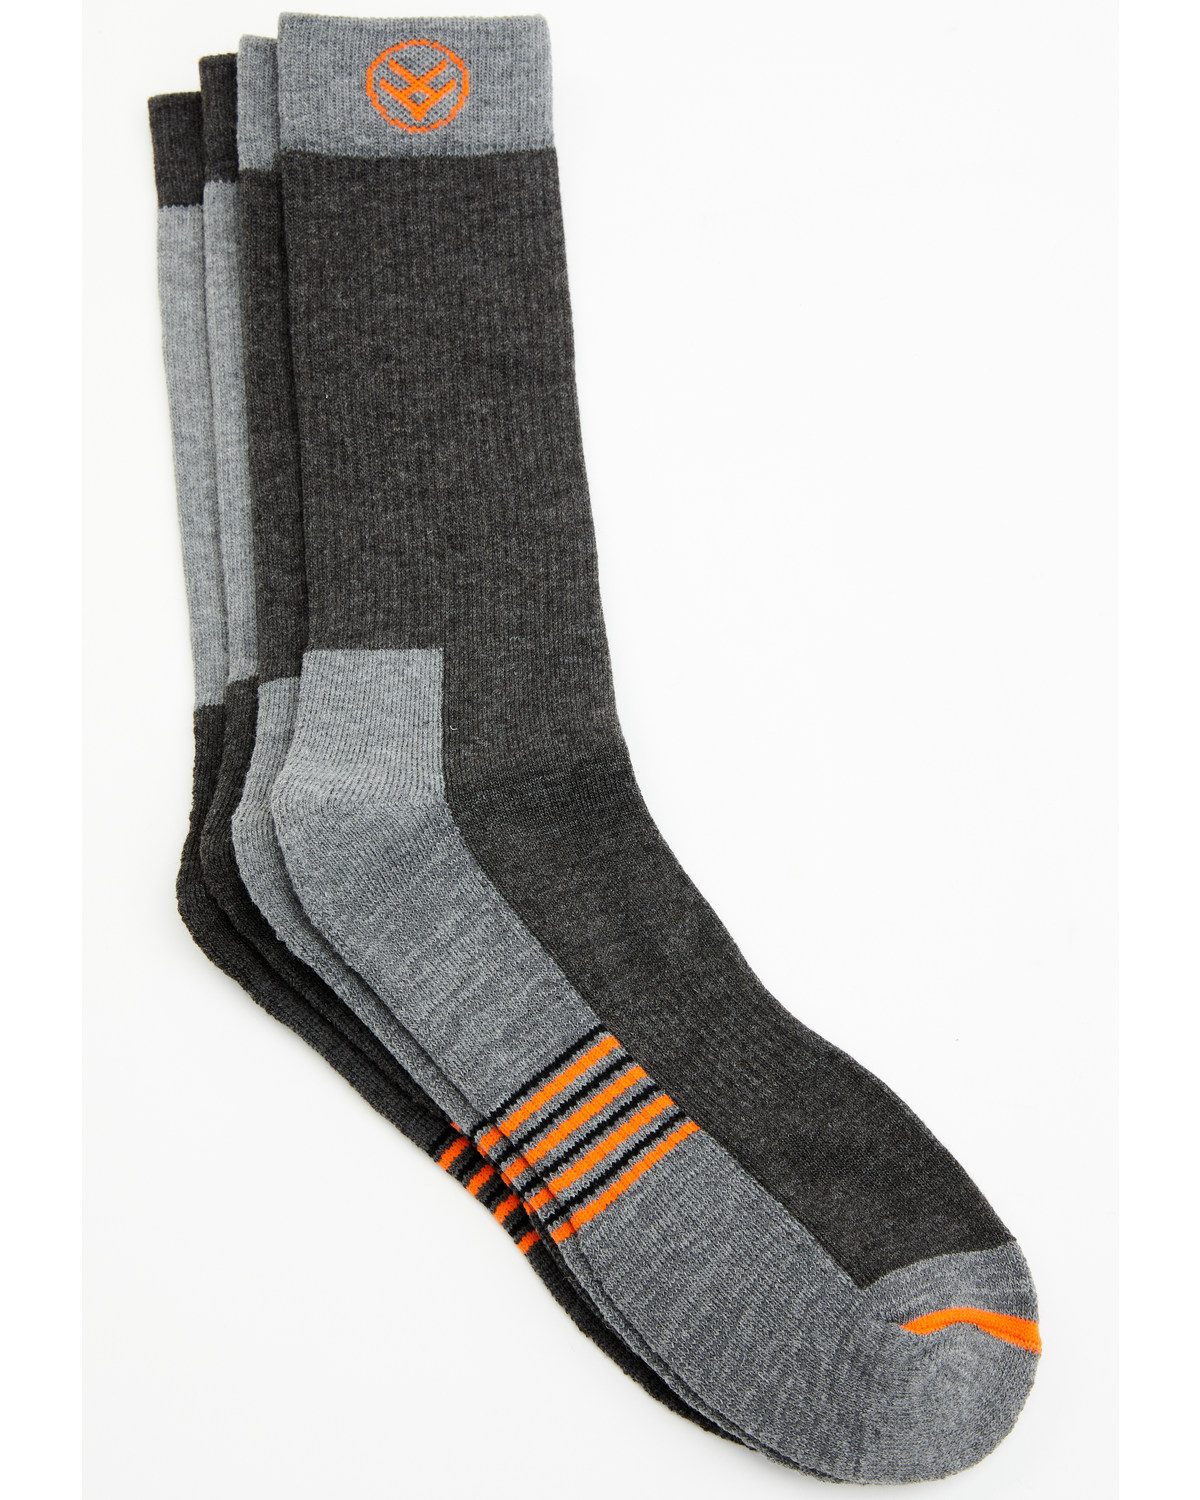 Hawx Men's Bodie Merino Wool Boot Socks